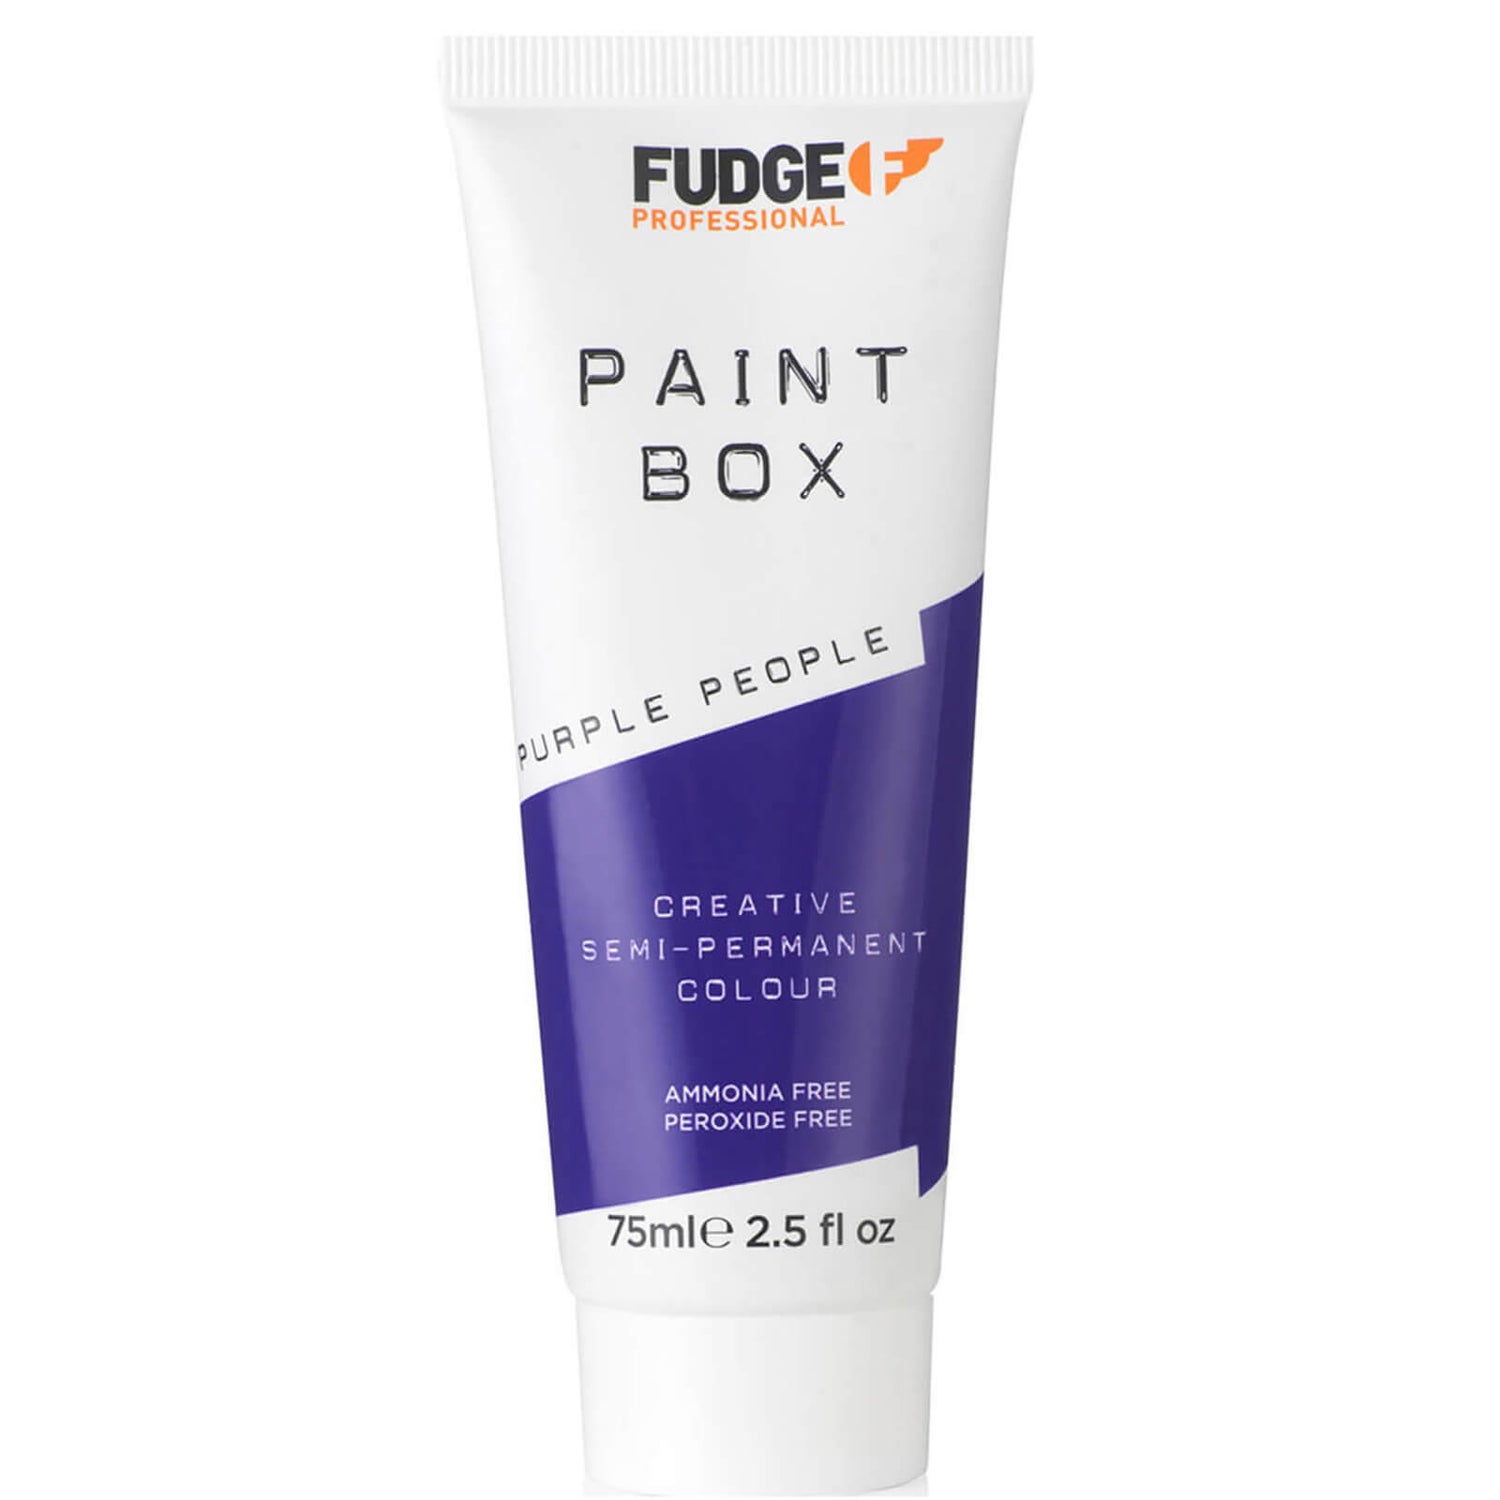 Fudge Paintbox Hair Colorant 75ml - Purple People